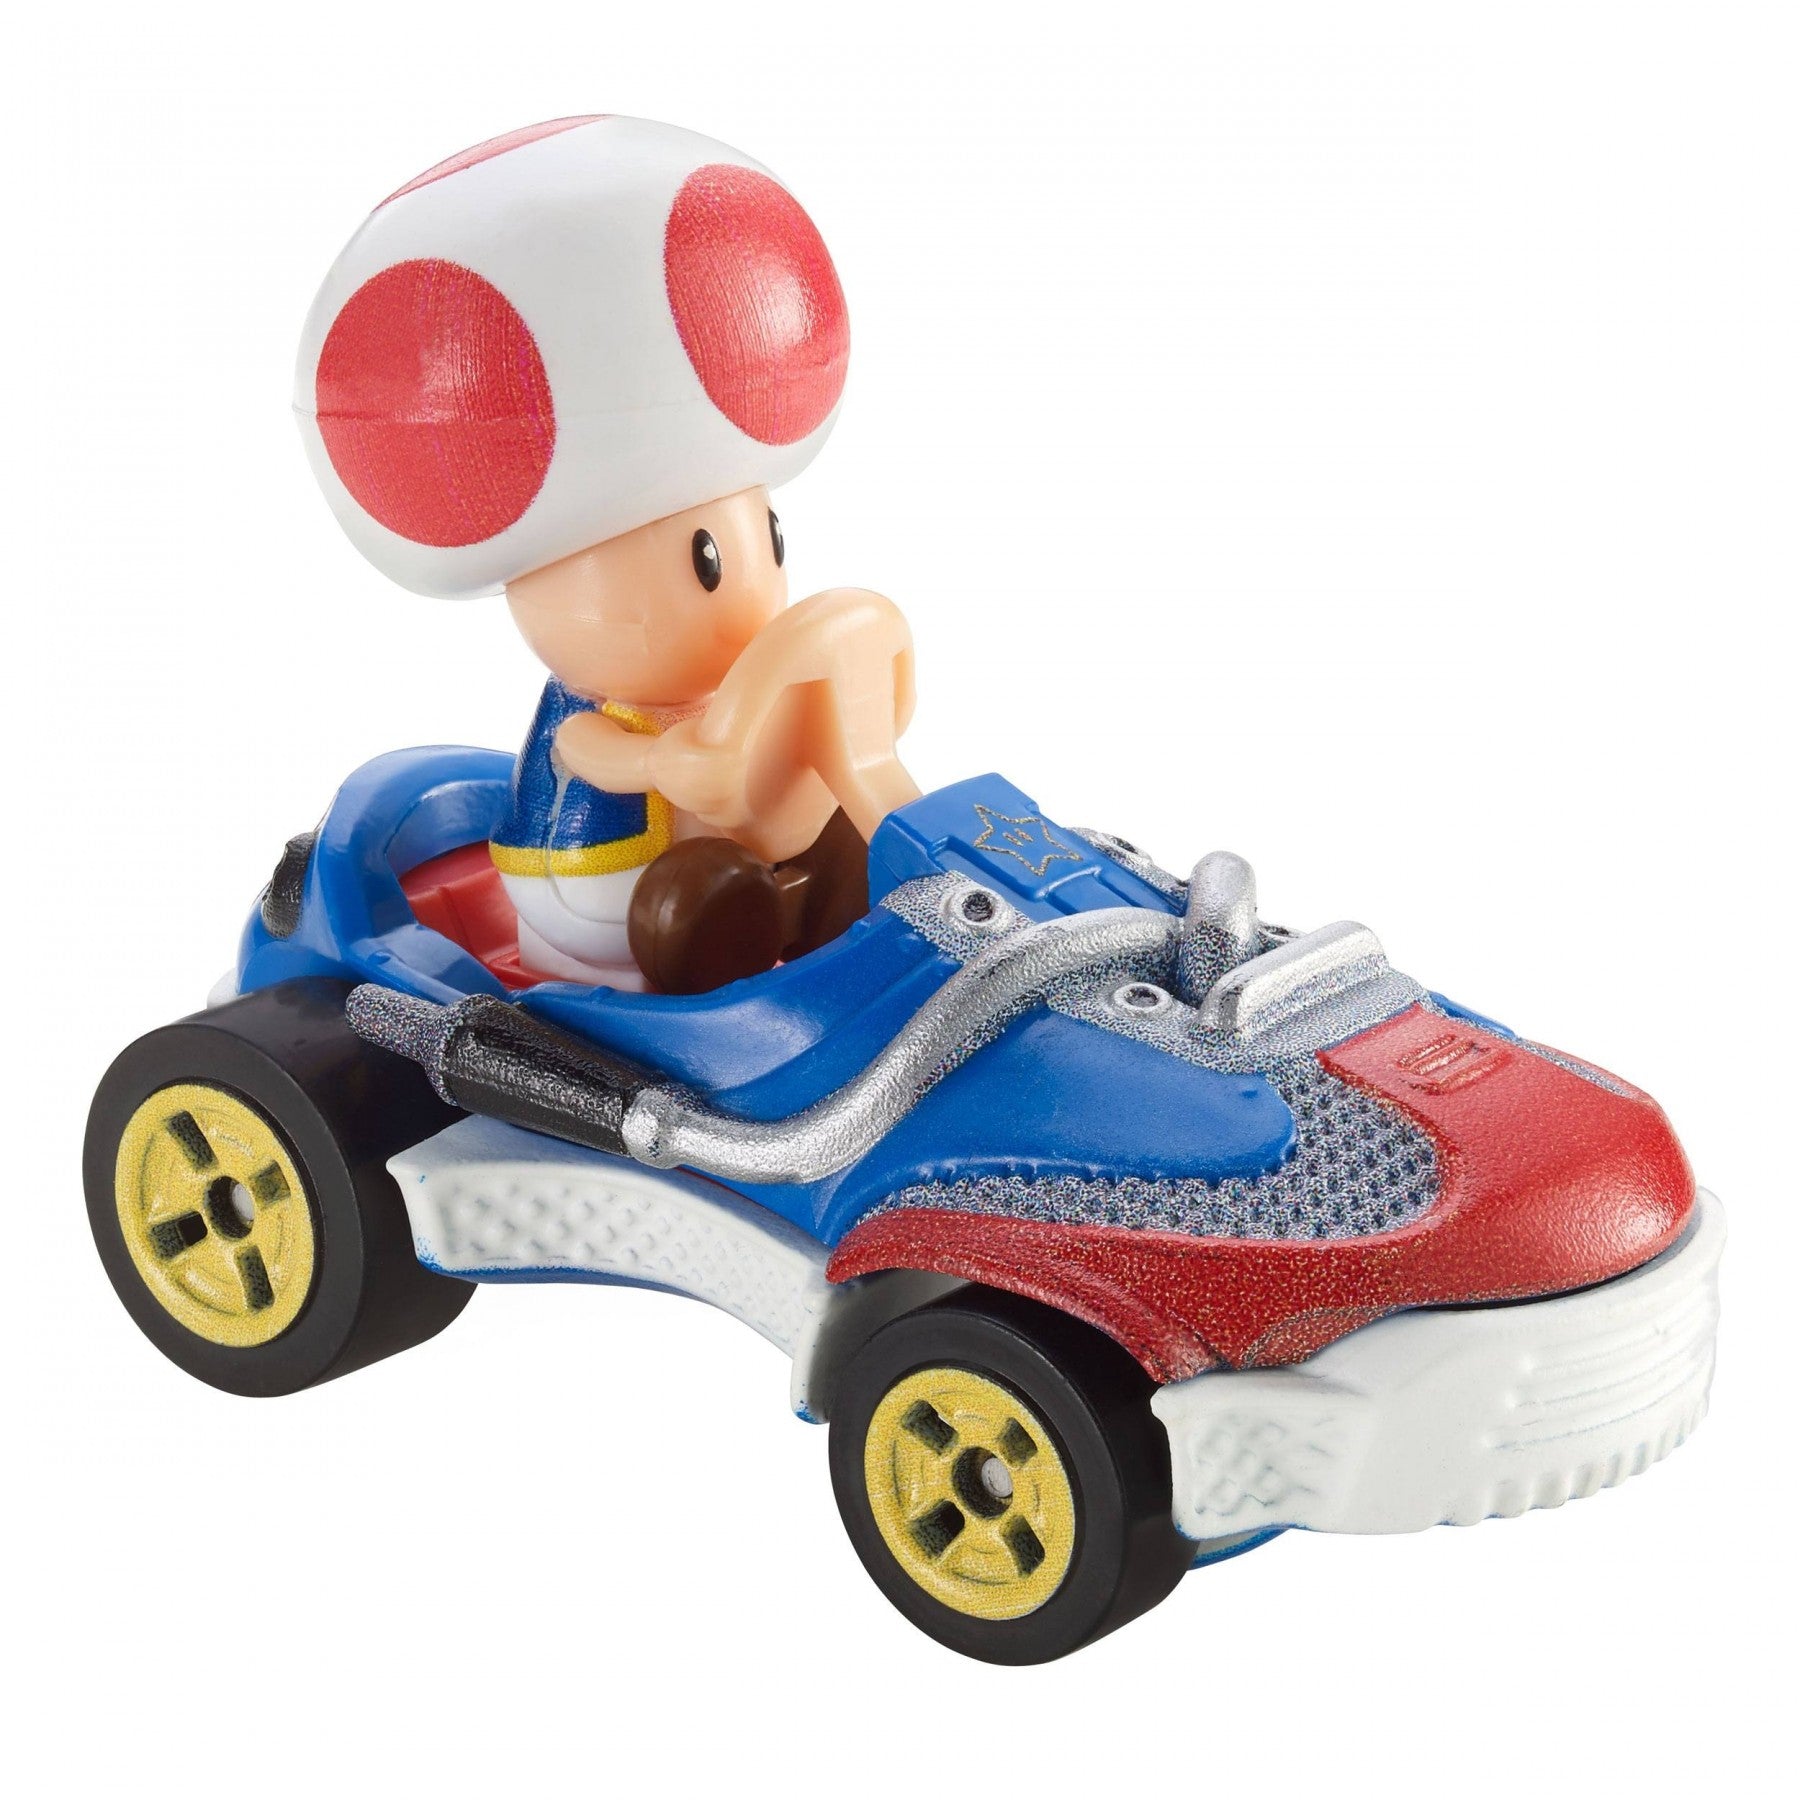 Mattel Hot Wheels Diecast Mario Kart Toad